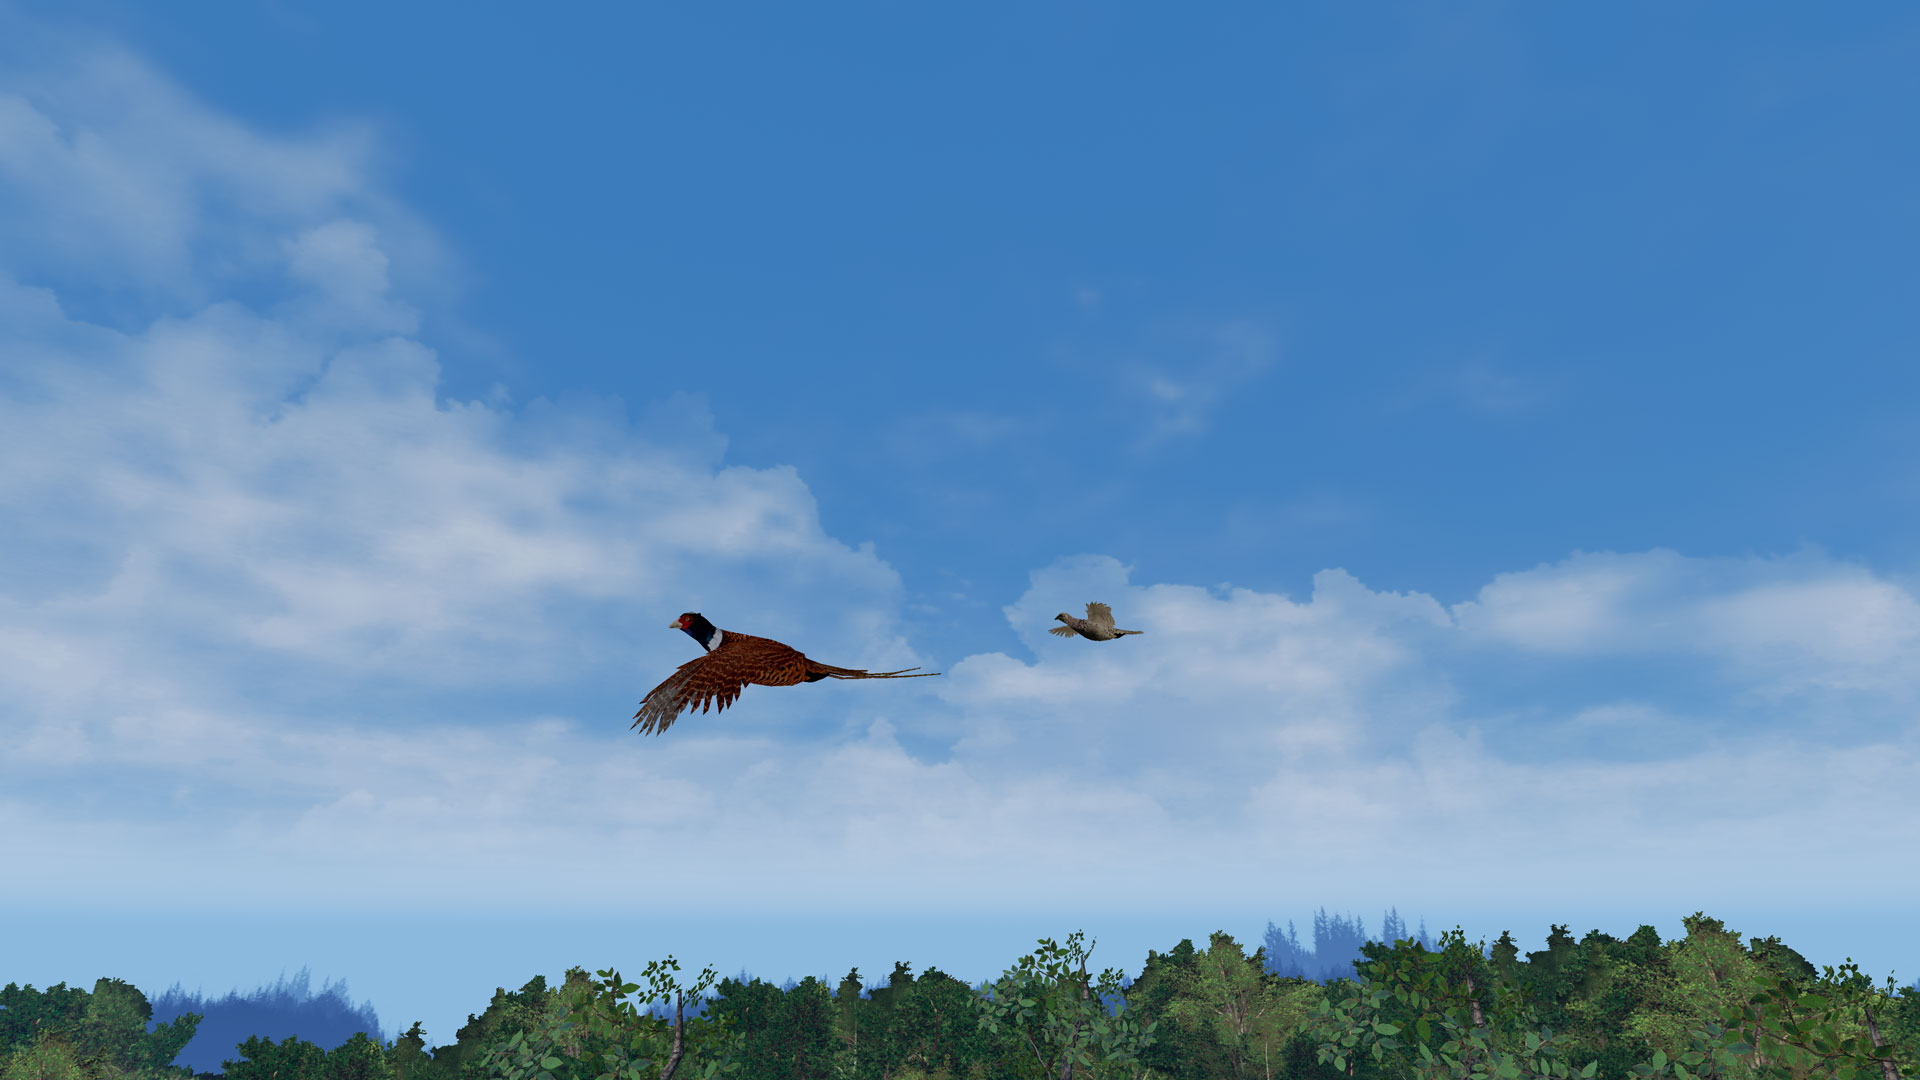 Pheasant flying in game